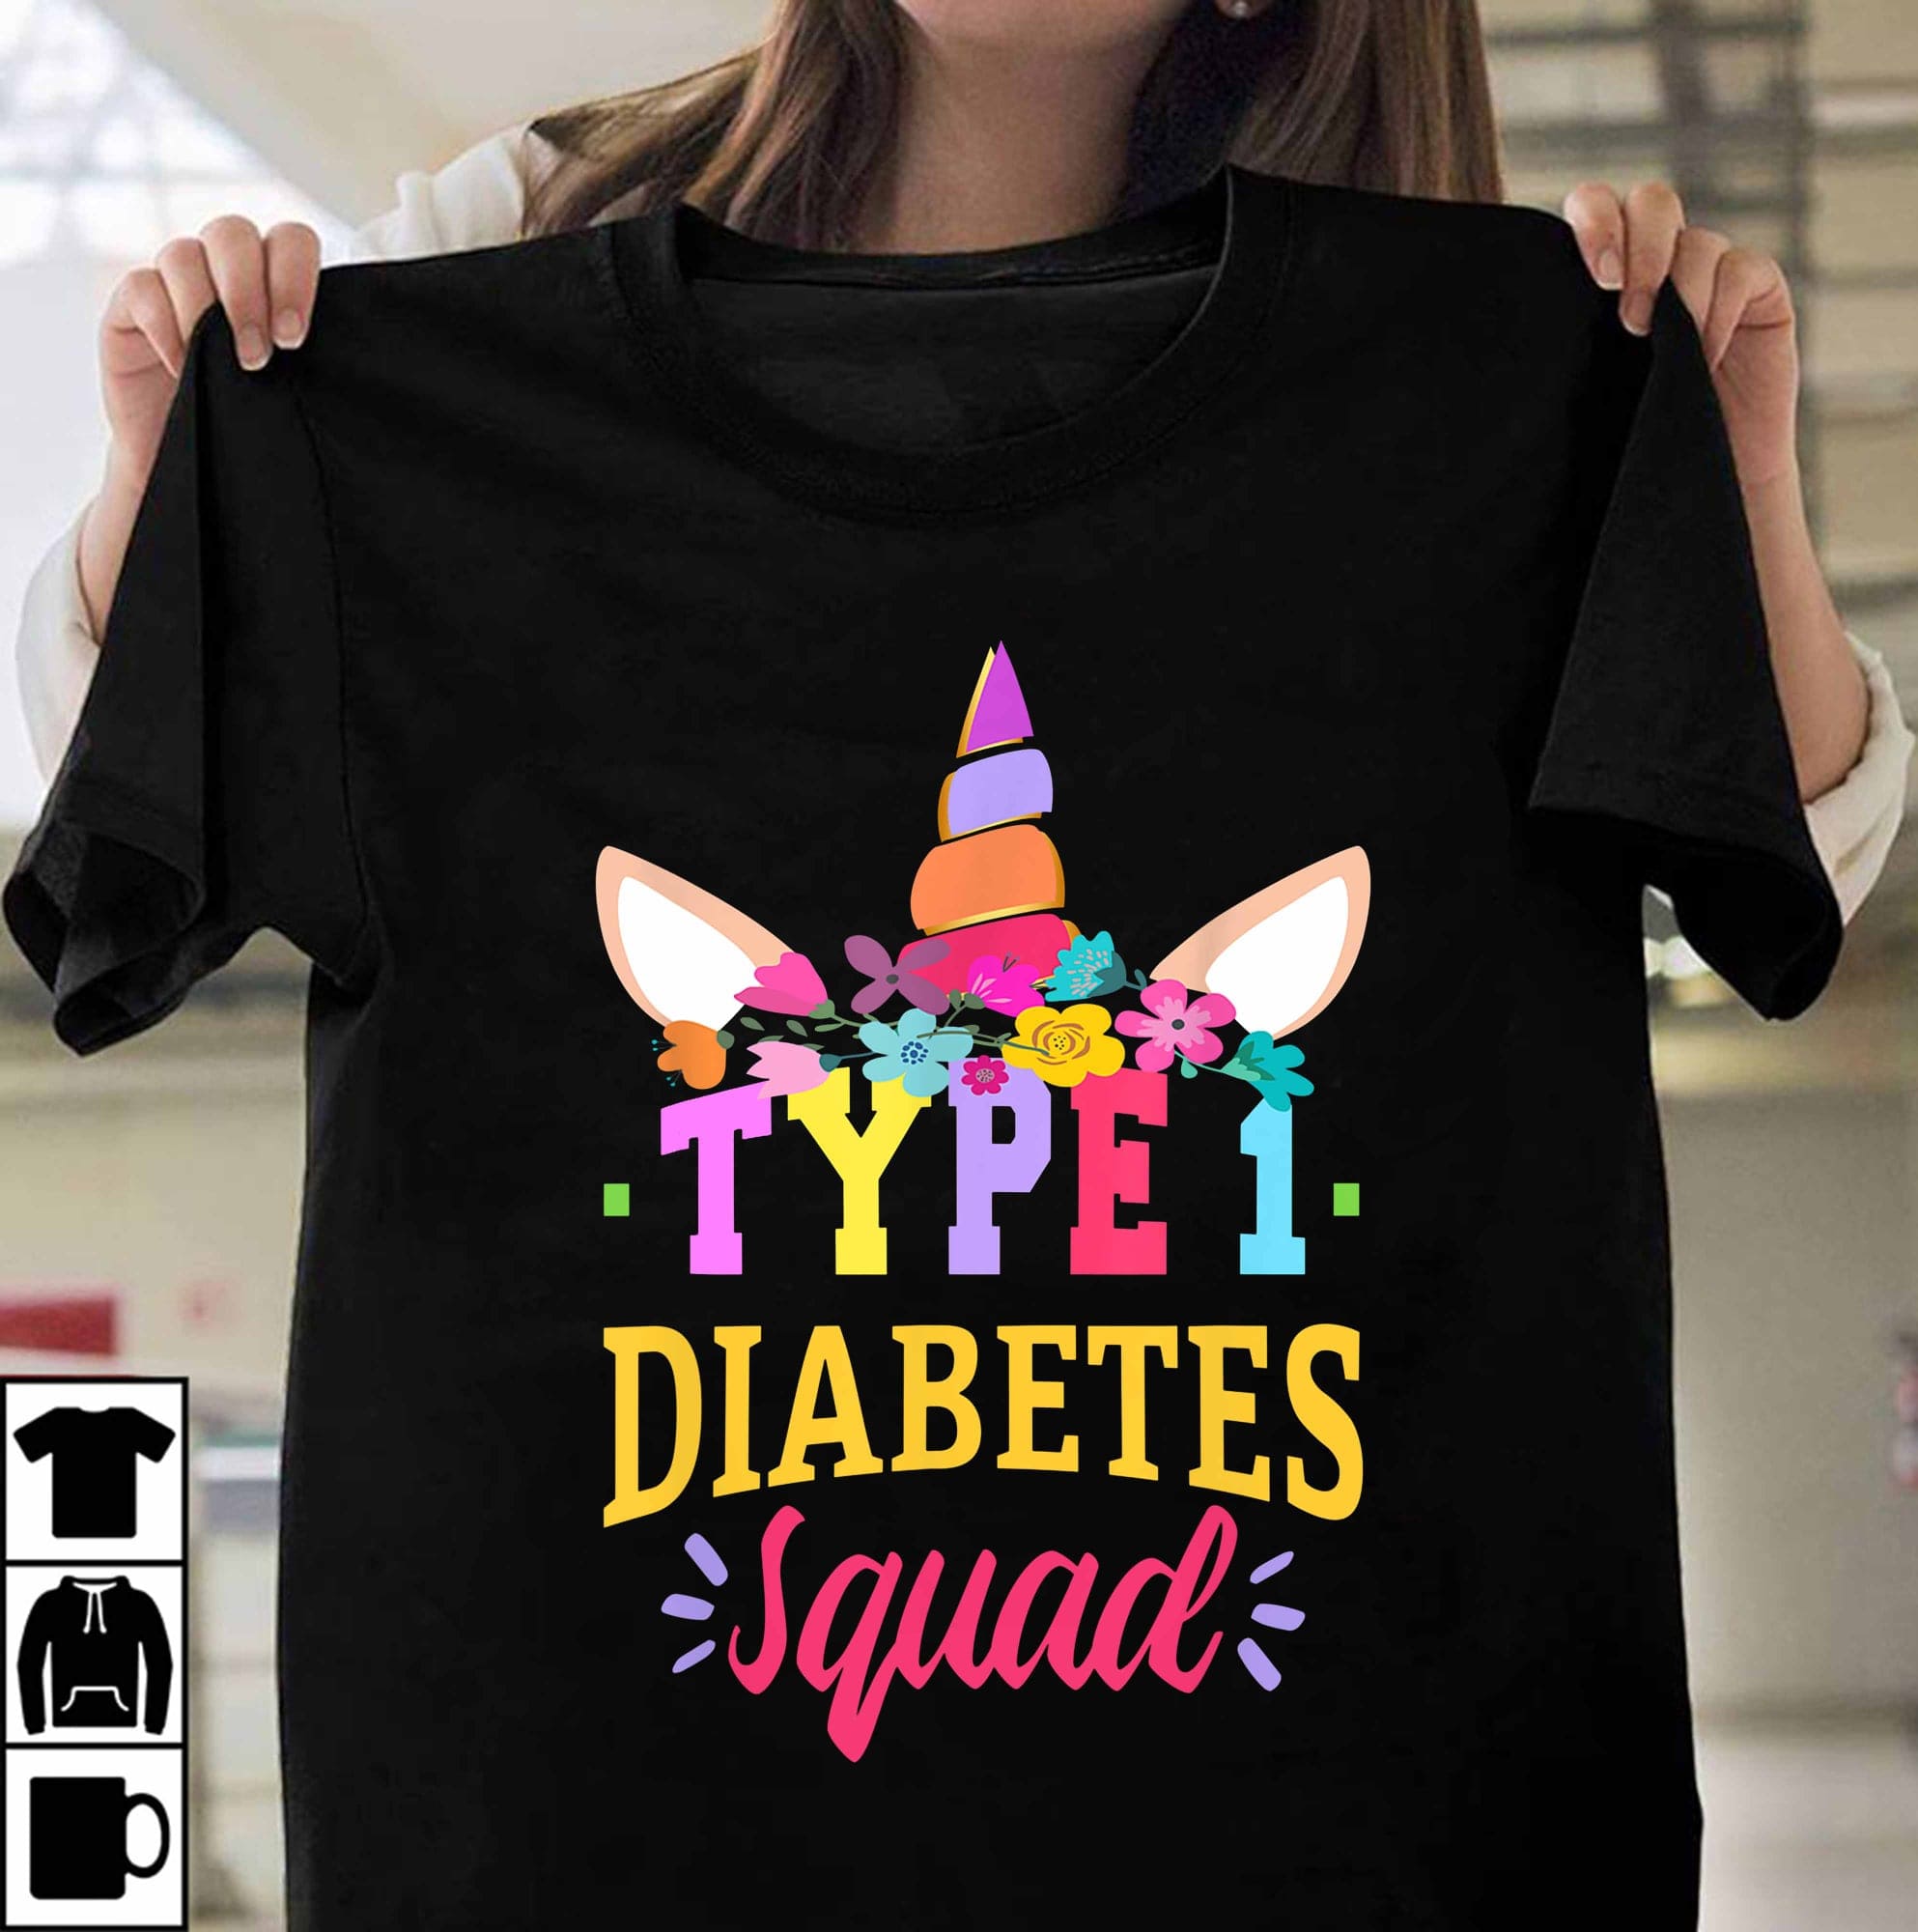 Type 1 diabetes squad - Diabetes awareness, floral unicorn horn